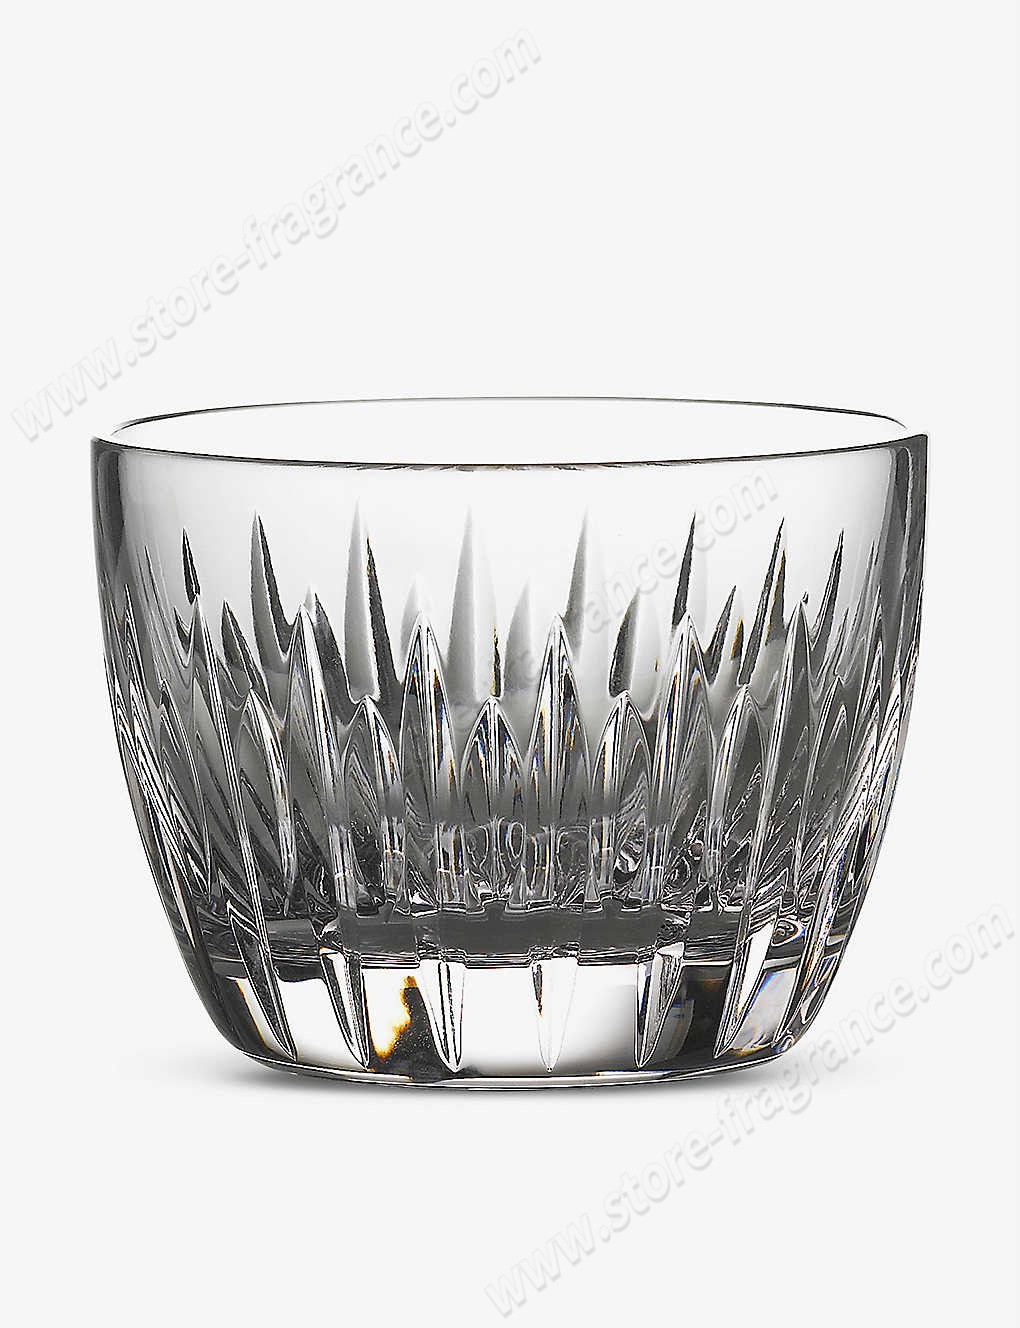 WATERFORD/Mara crystal glass votive candleholder 6cm ✿ Discount Store - WATERFORD/Mara crystal glass votive candleholder 6cm ✿ Discount Store